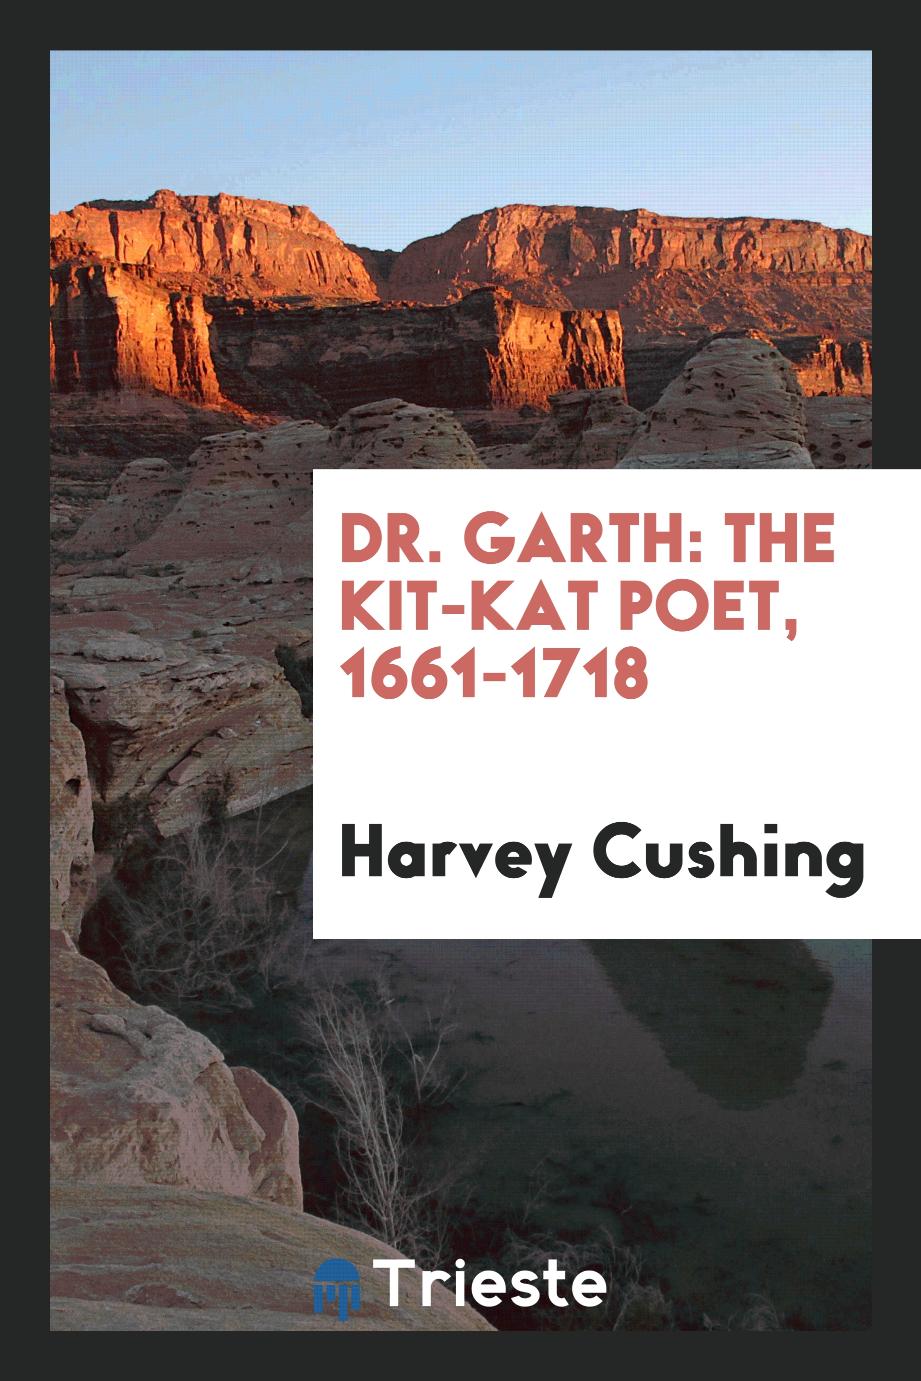 Dr. Garth: the Kit-Kat poet, 1661-1718